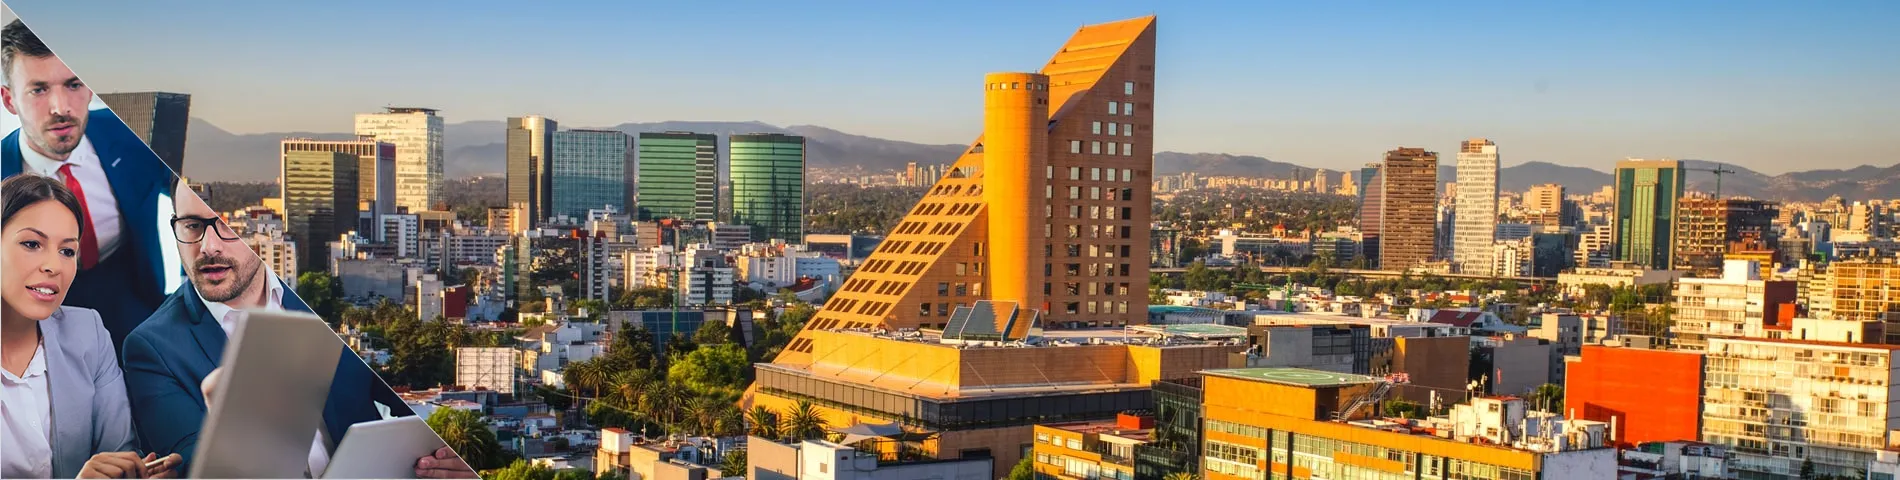 Mexico City - 